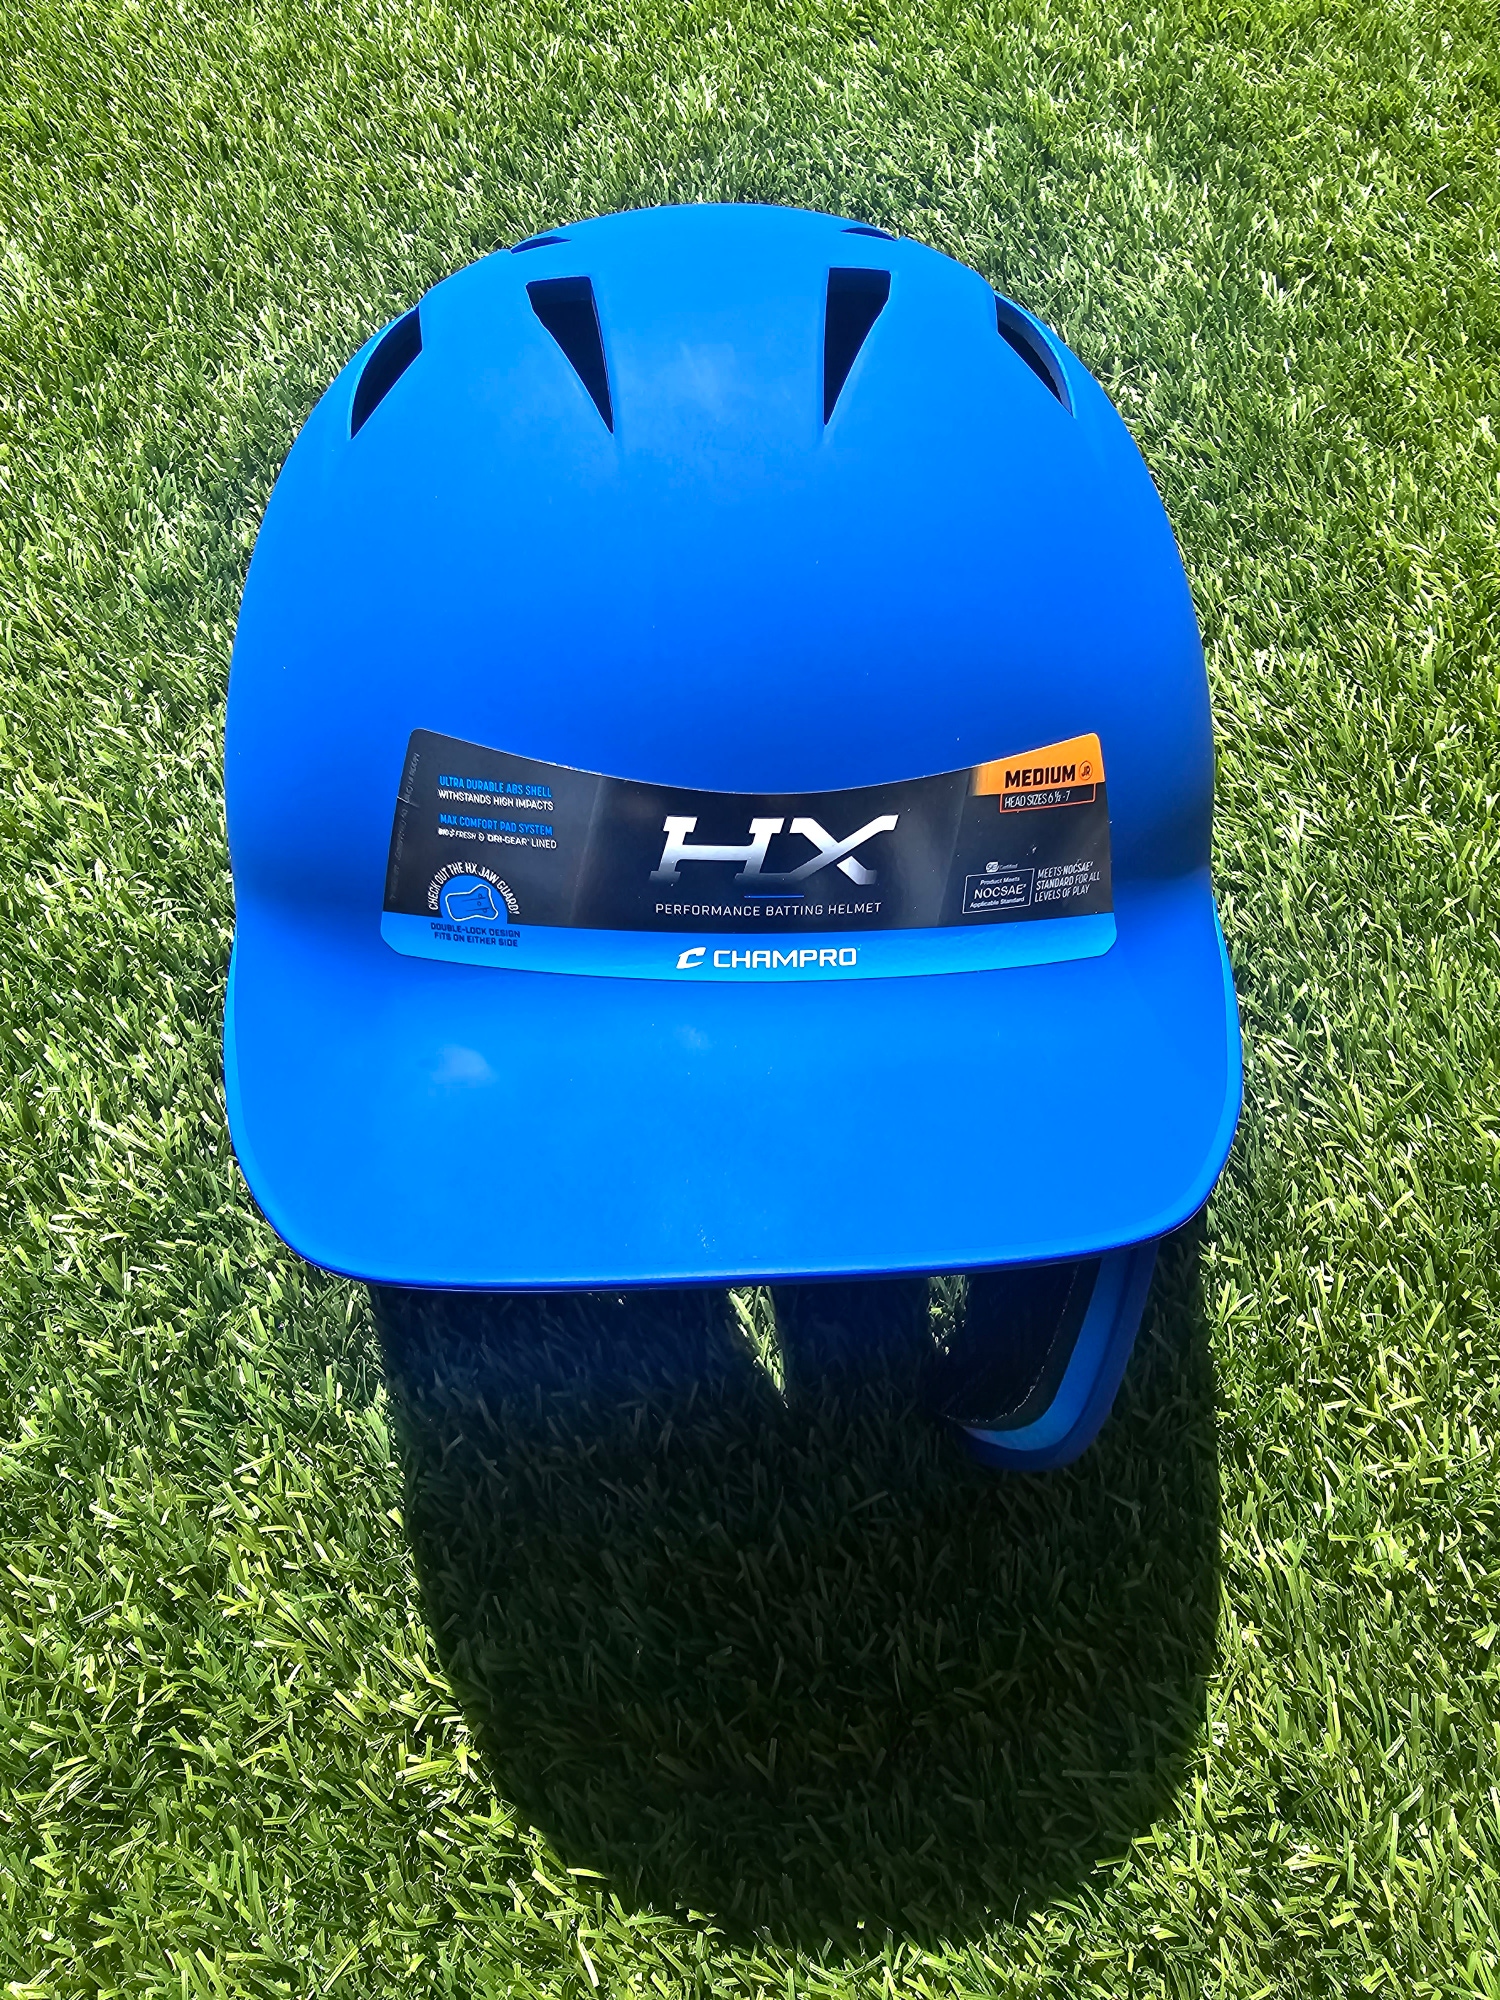 New Medium Champro HX Batting Helmet